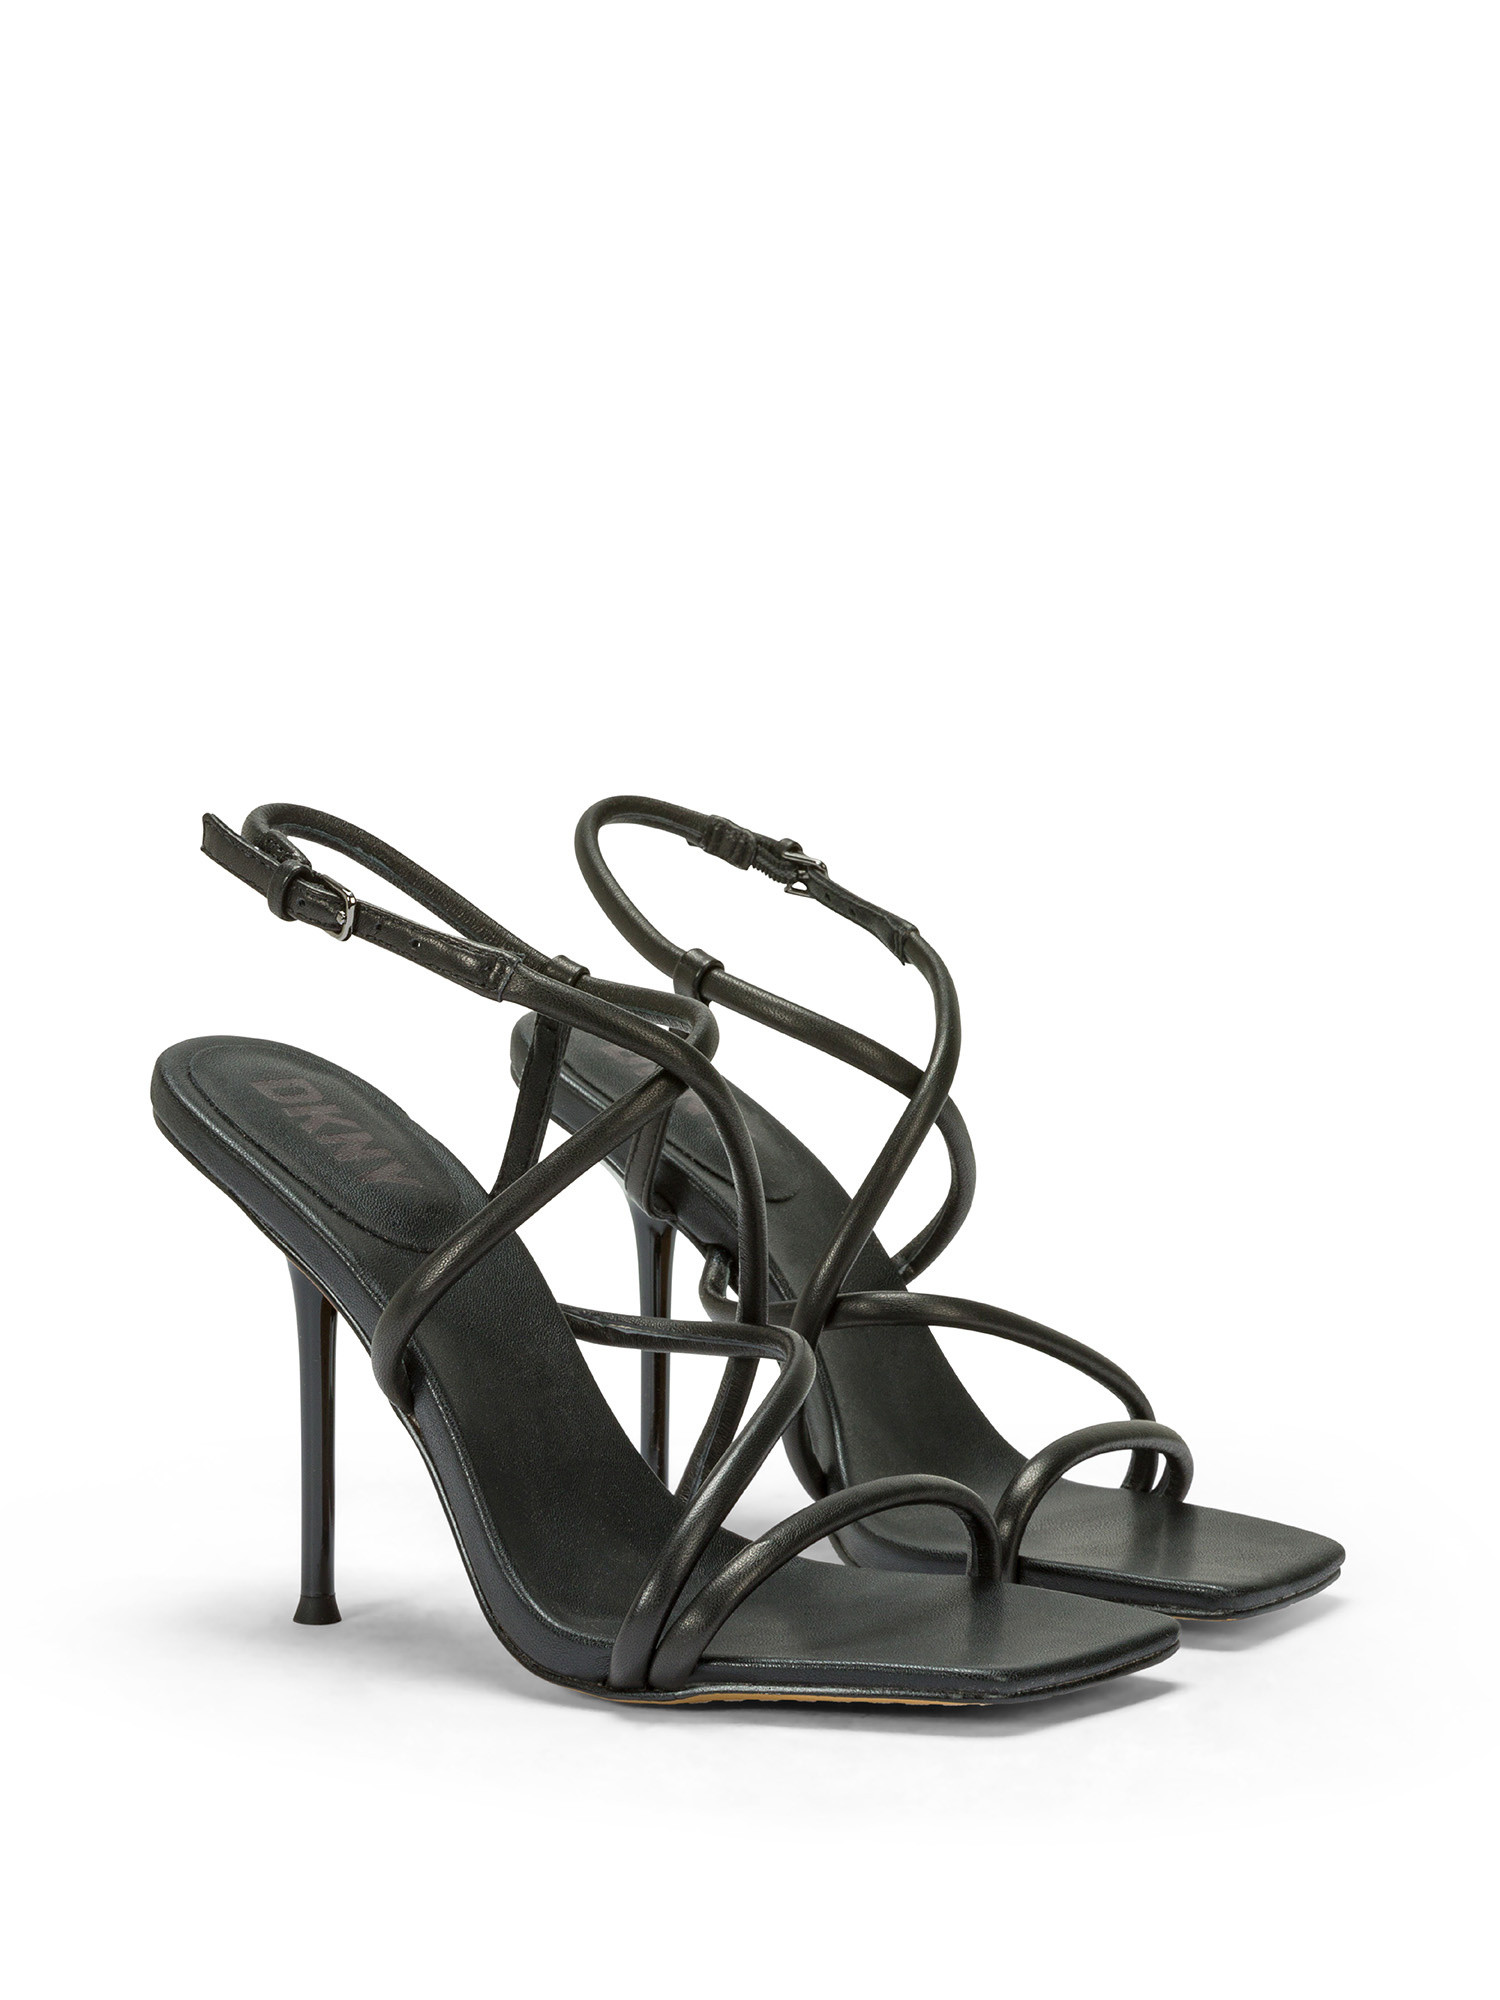 Dkny - Reia sandals with heel, Black, large image number 1